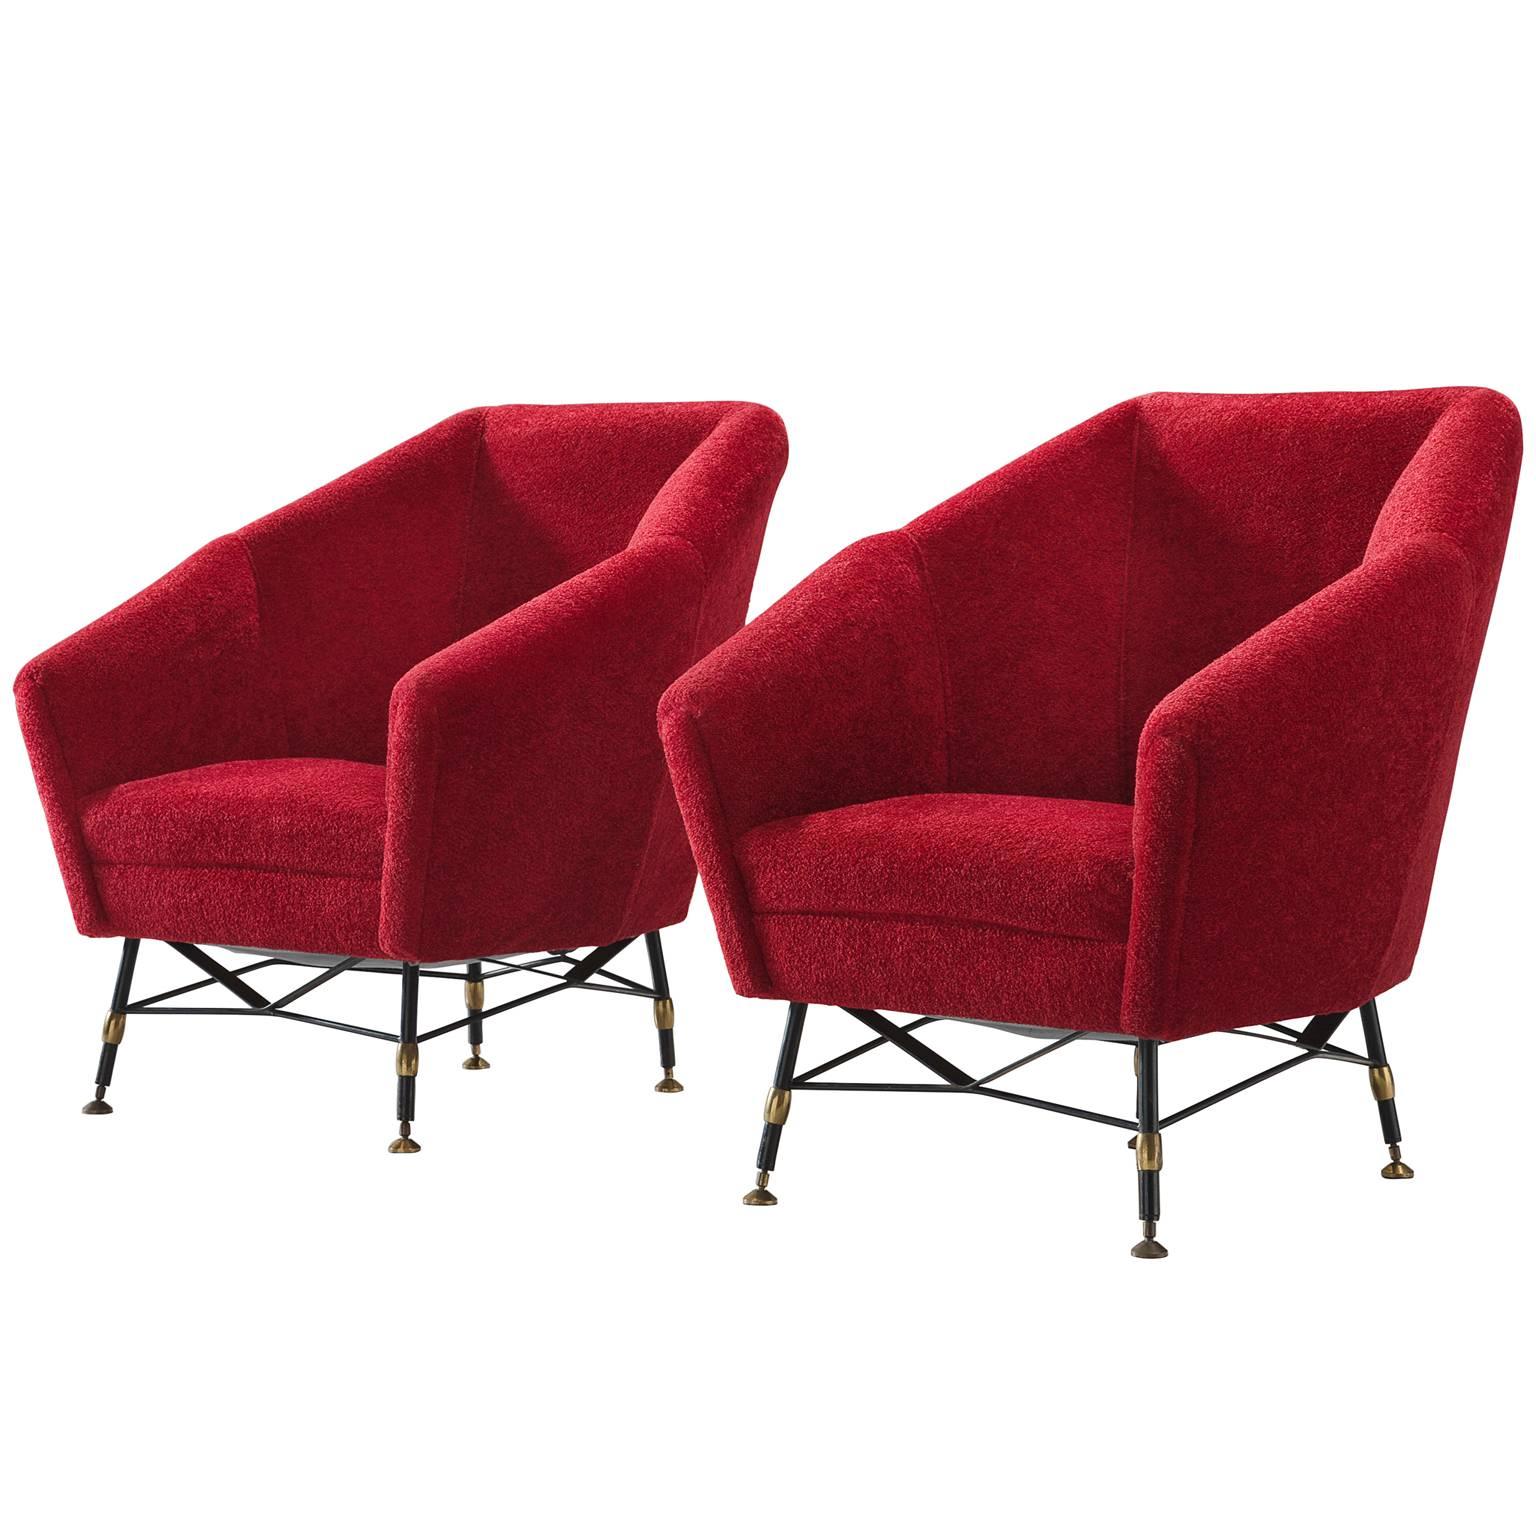 Italian Red Easy Chairs, circa 1950